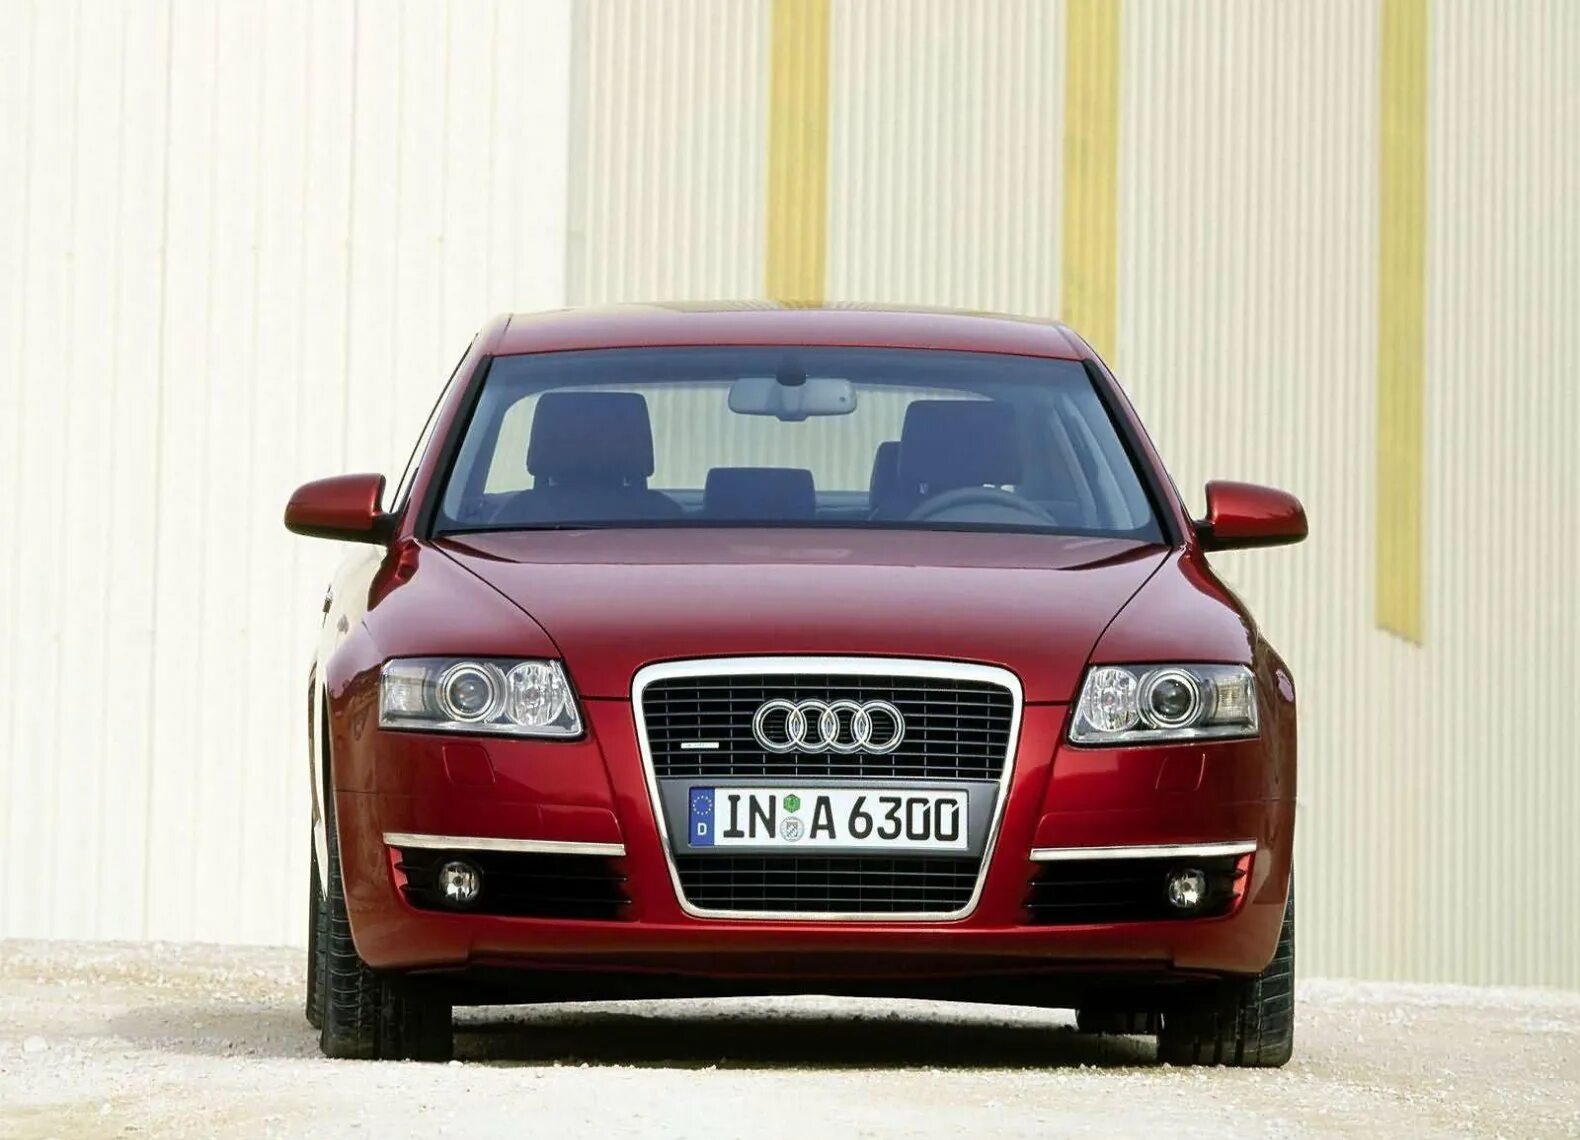 Ауди а6 3.0 кватро. Audi a6 2005. Ауди а6 2005. Audi a6 c6 3.0 TDI. Audi a6 c6 2005.